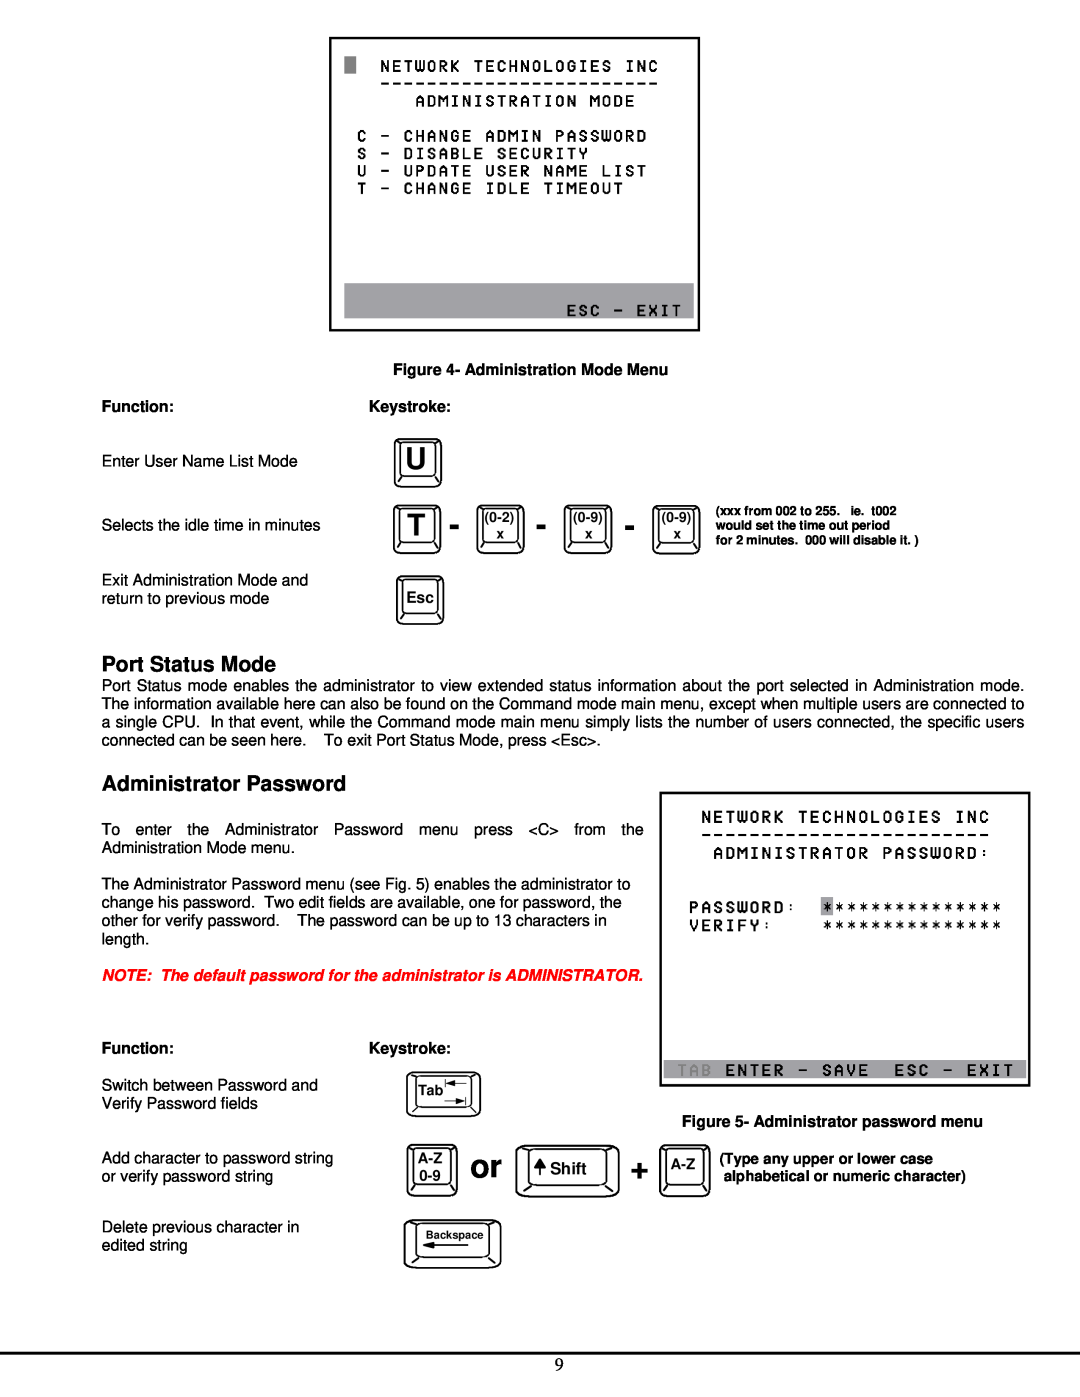 Network Technologies ST-NXM-U-HD manual Port Status Mode, Administrator Password, Shift 